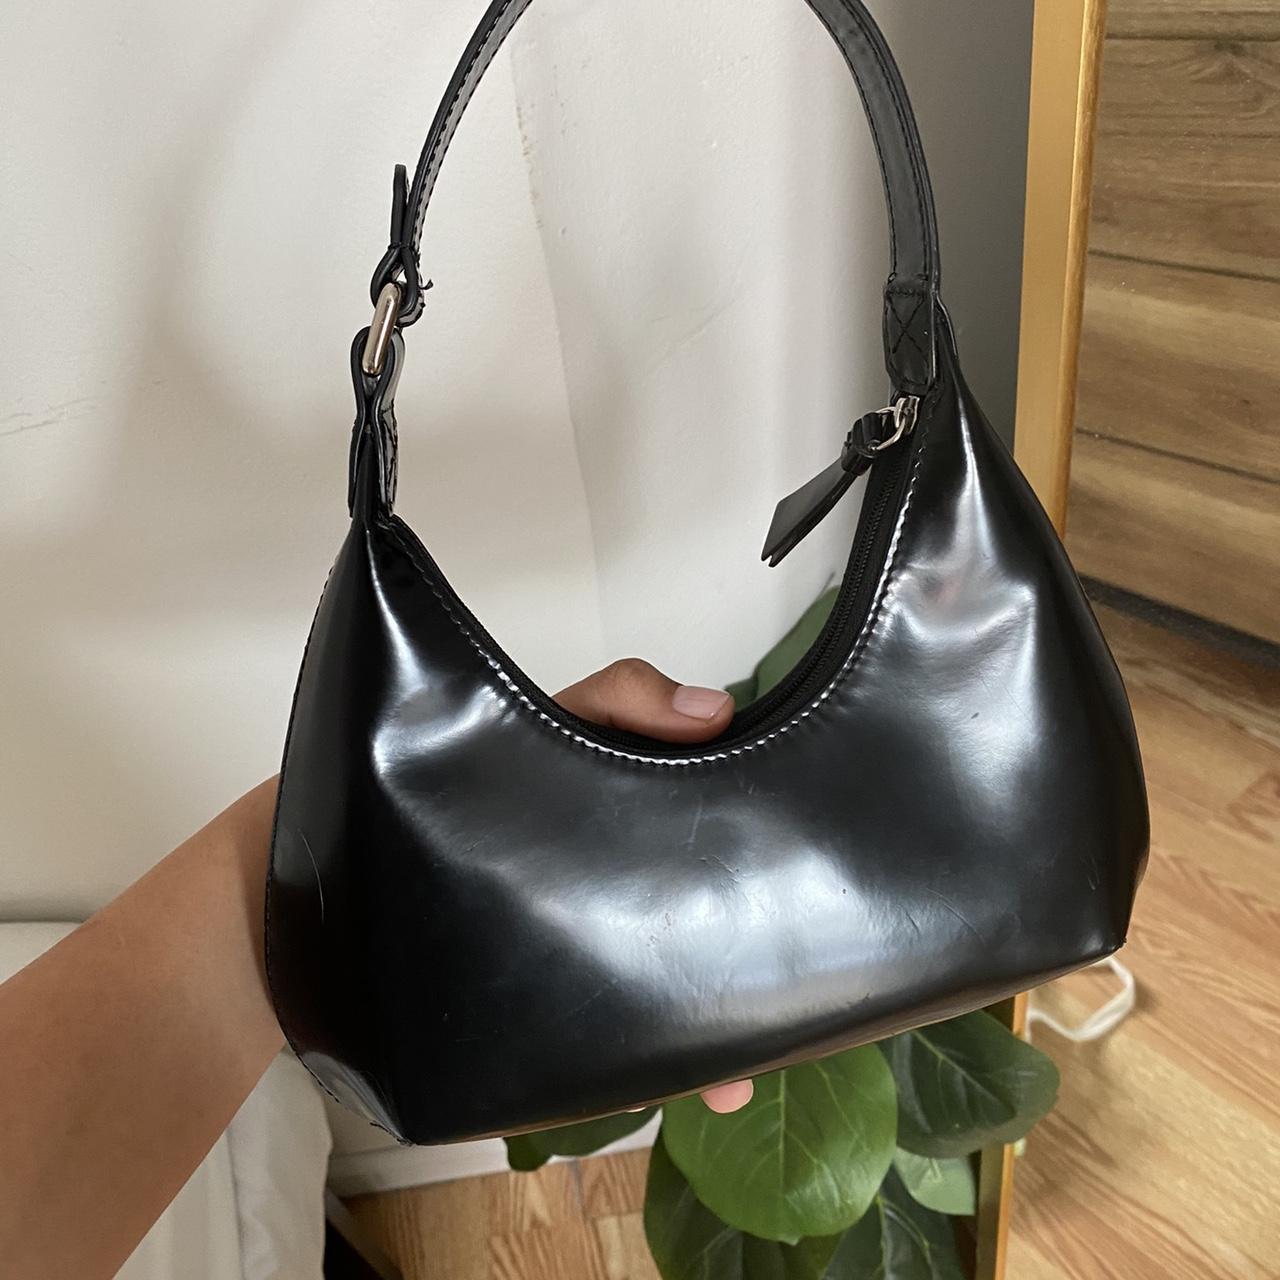 BY FAR: mini bag for woman - Black